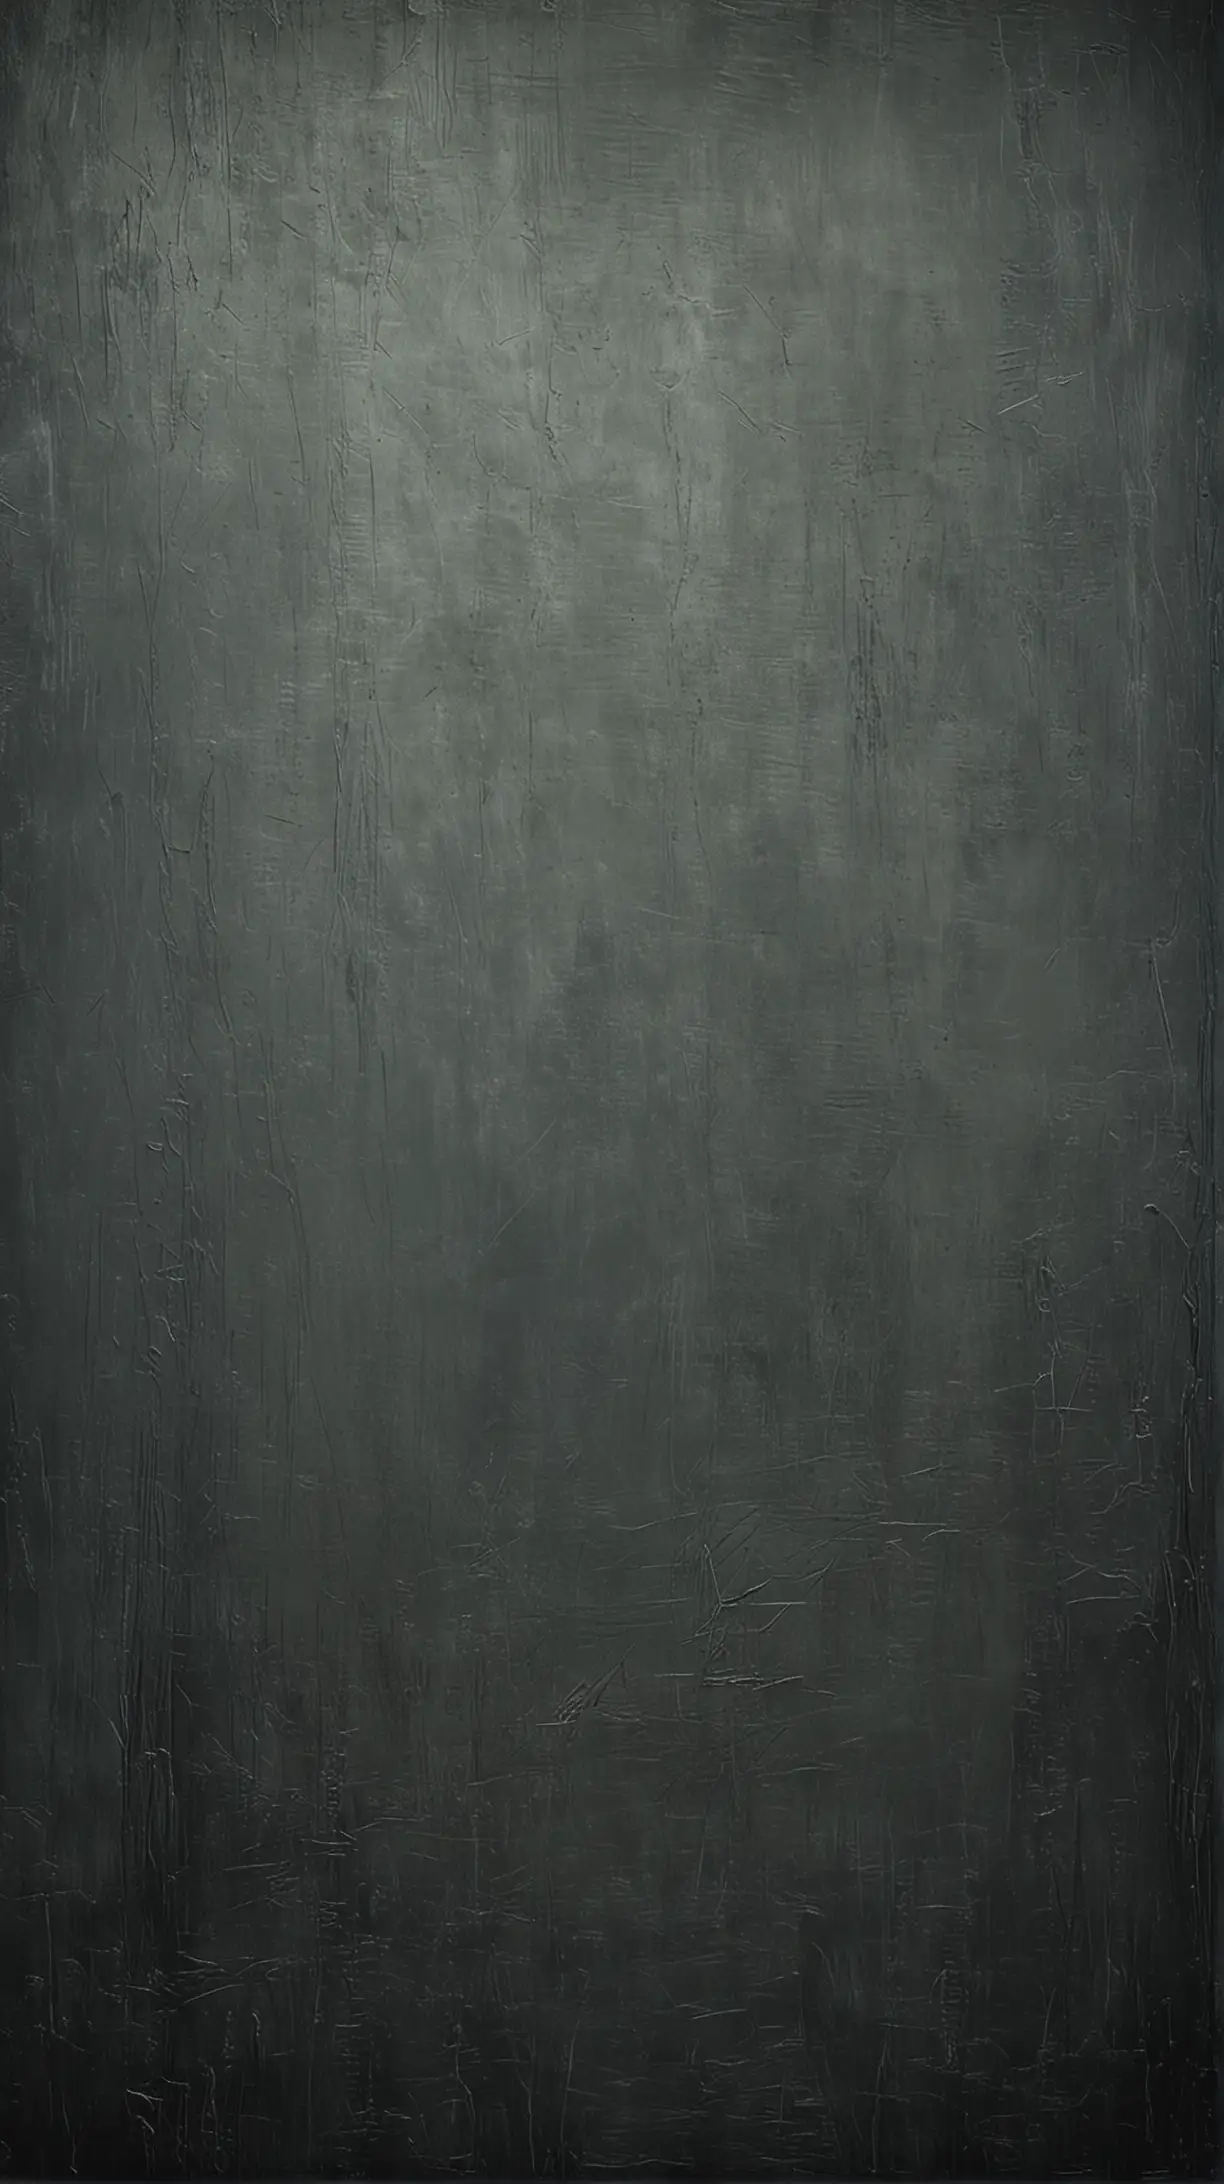 artistic fine art oil paint style textures with dark grayish digital background with slightly darker edges